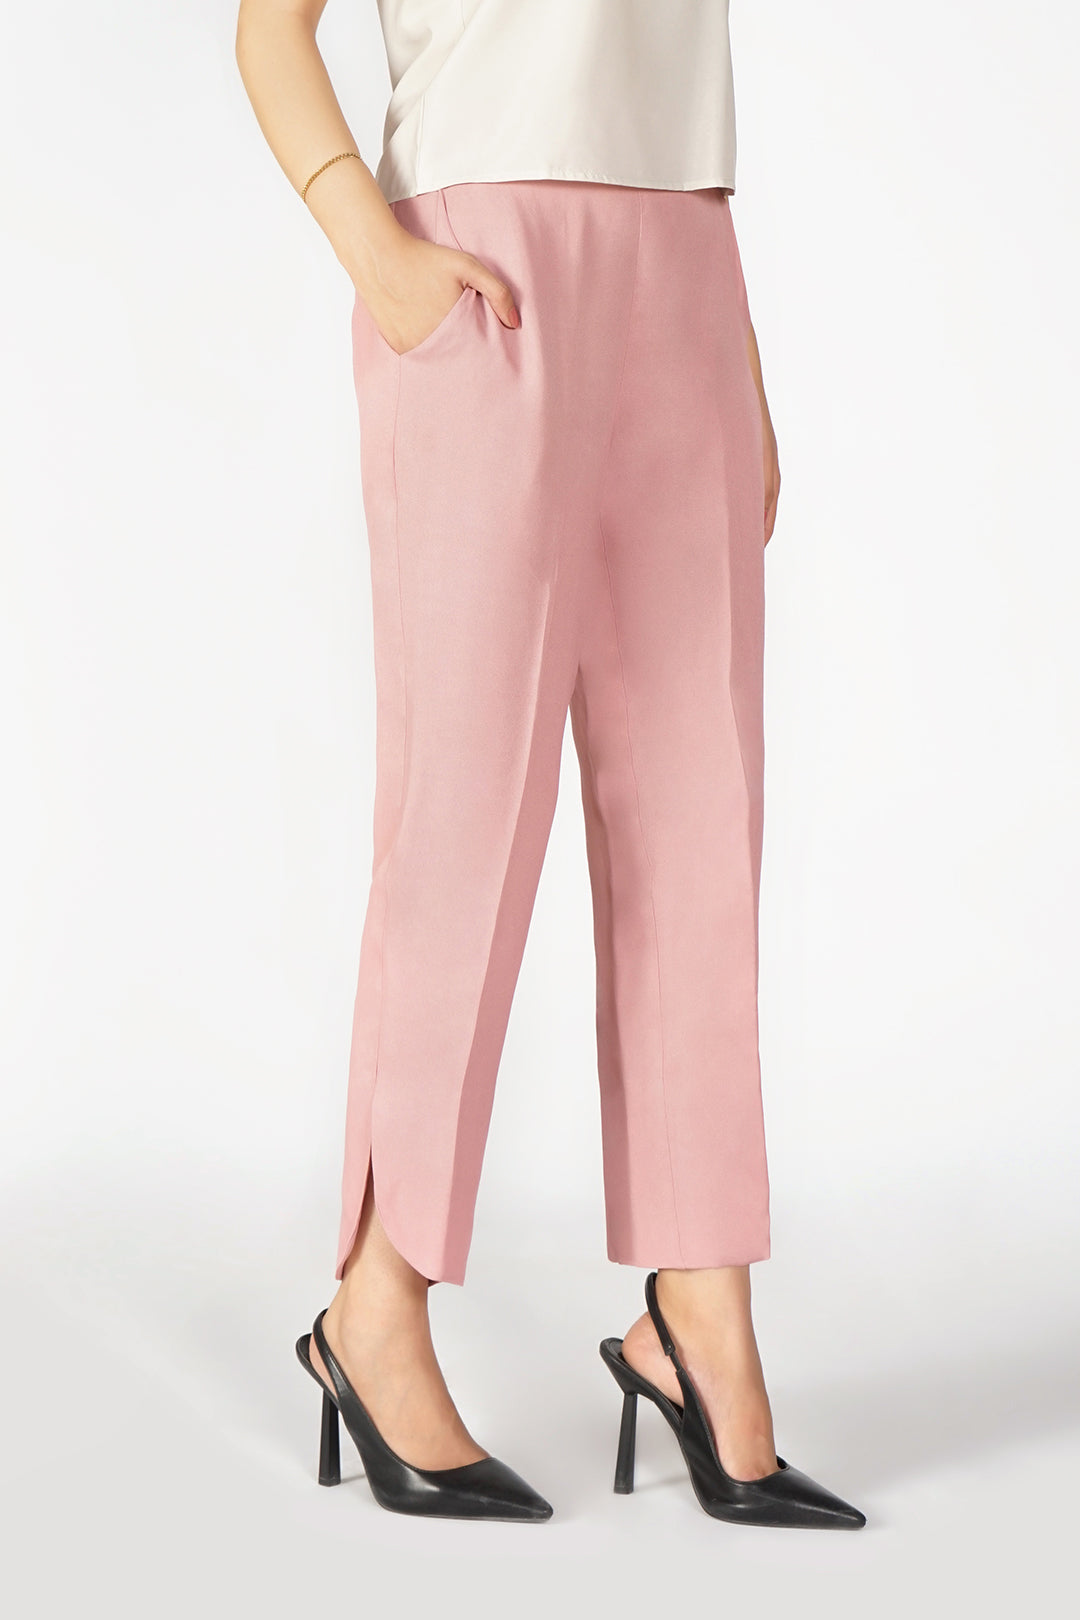 T-Pink Pants